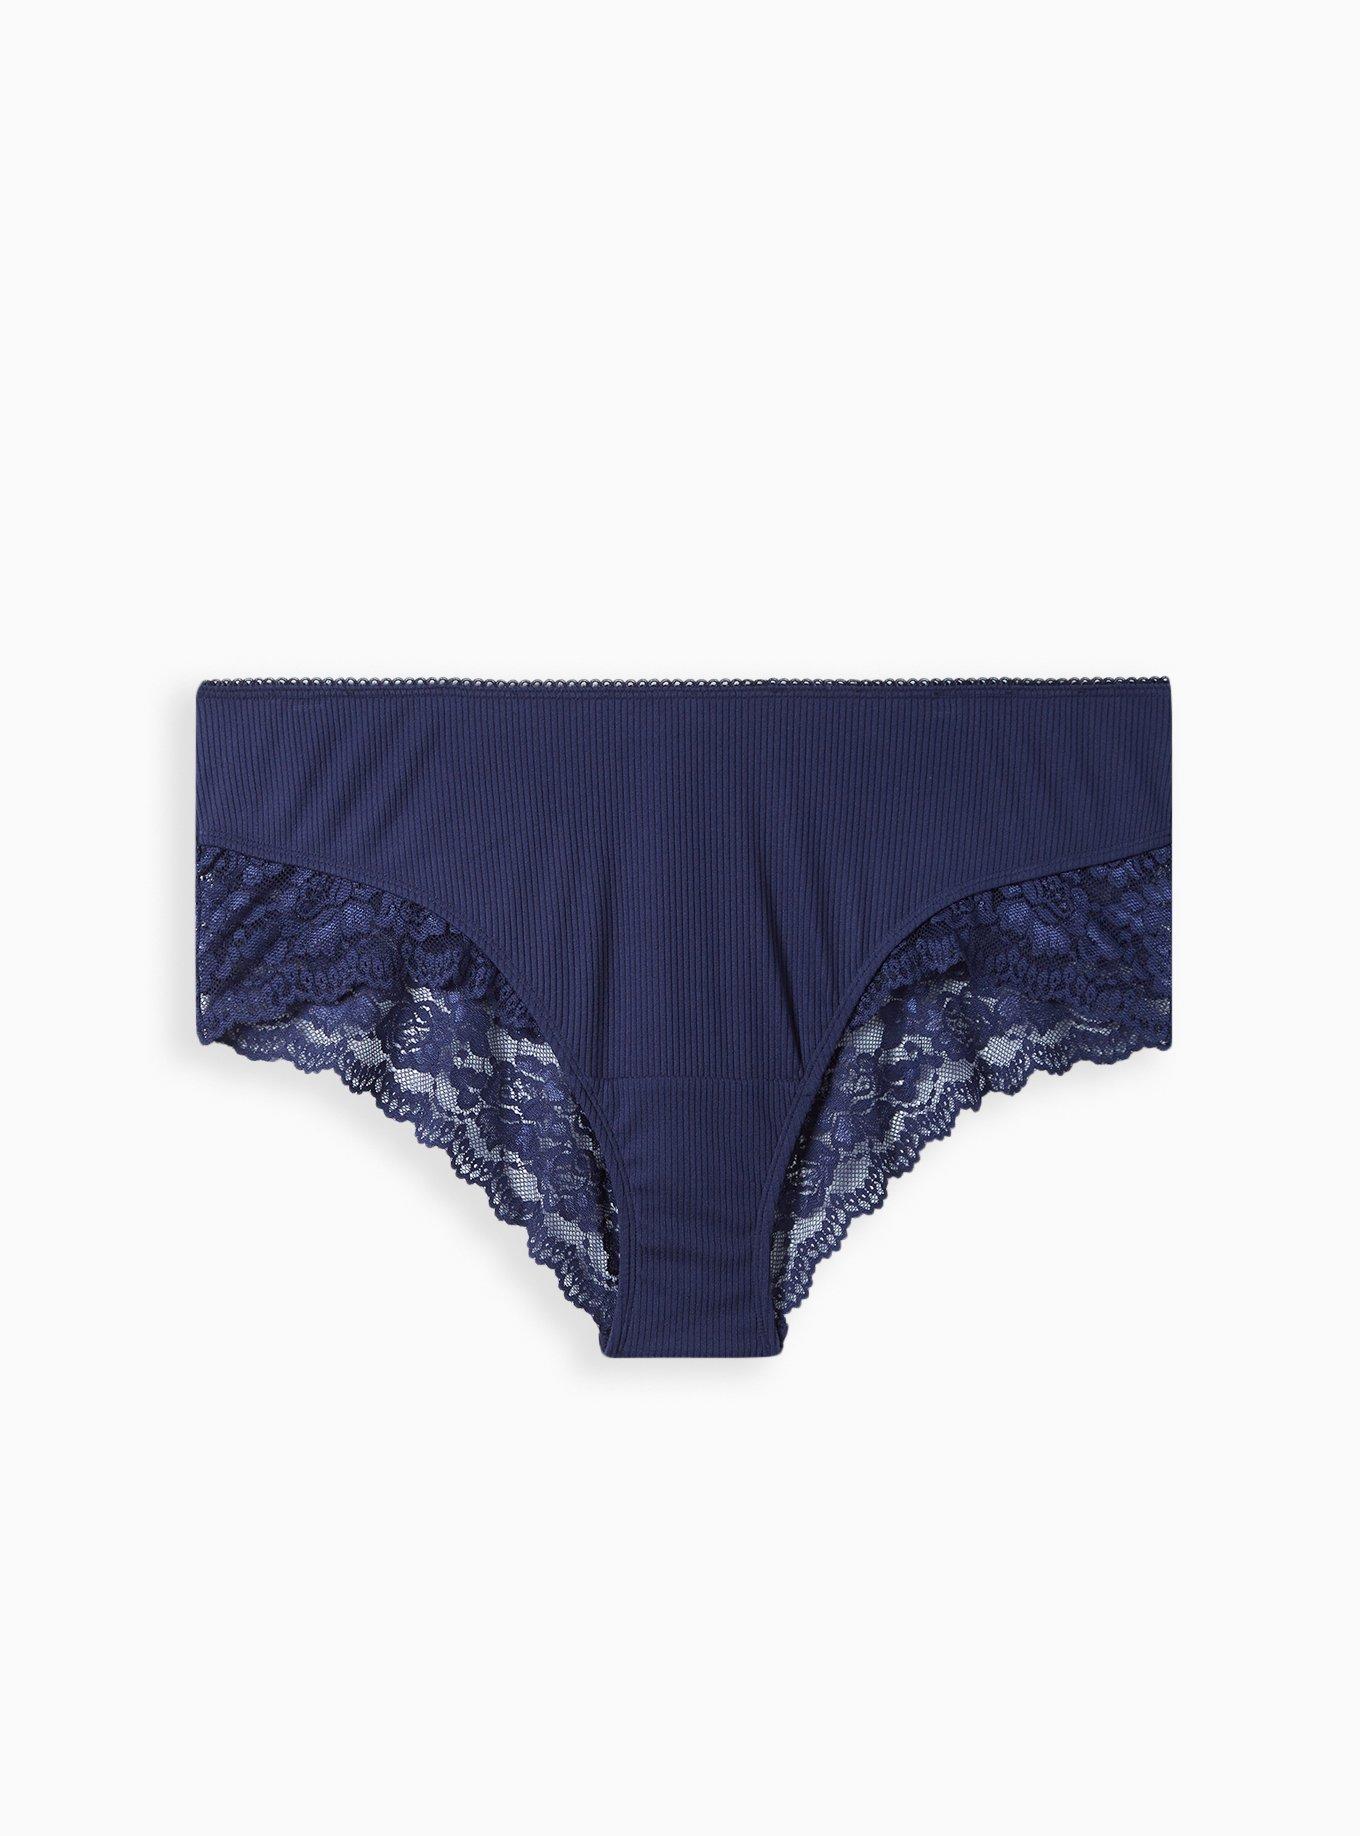 Flirtitude Women's Wide Elastic Cheeky Panties X-LARGE Blue Bayou